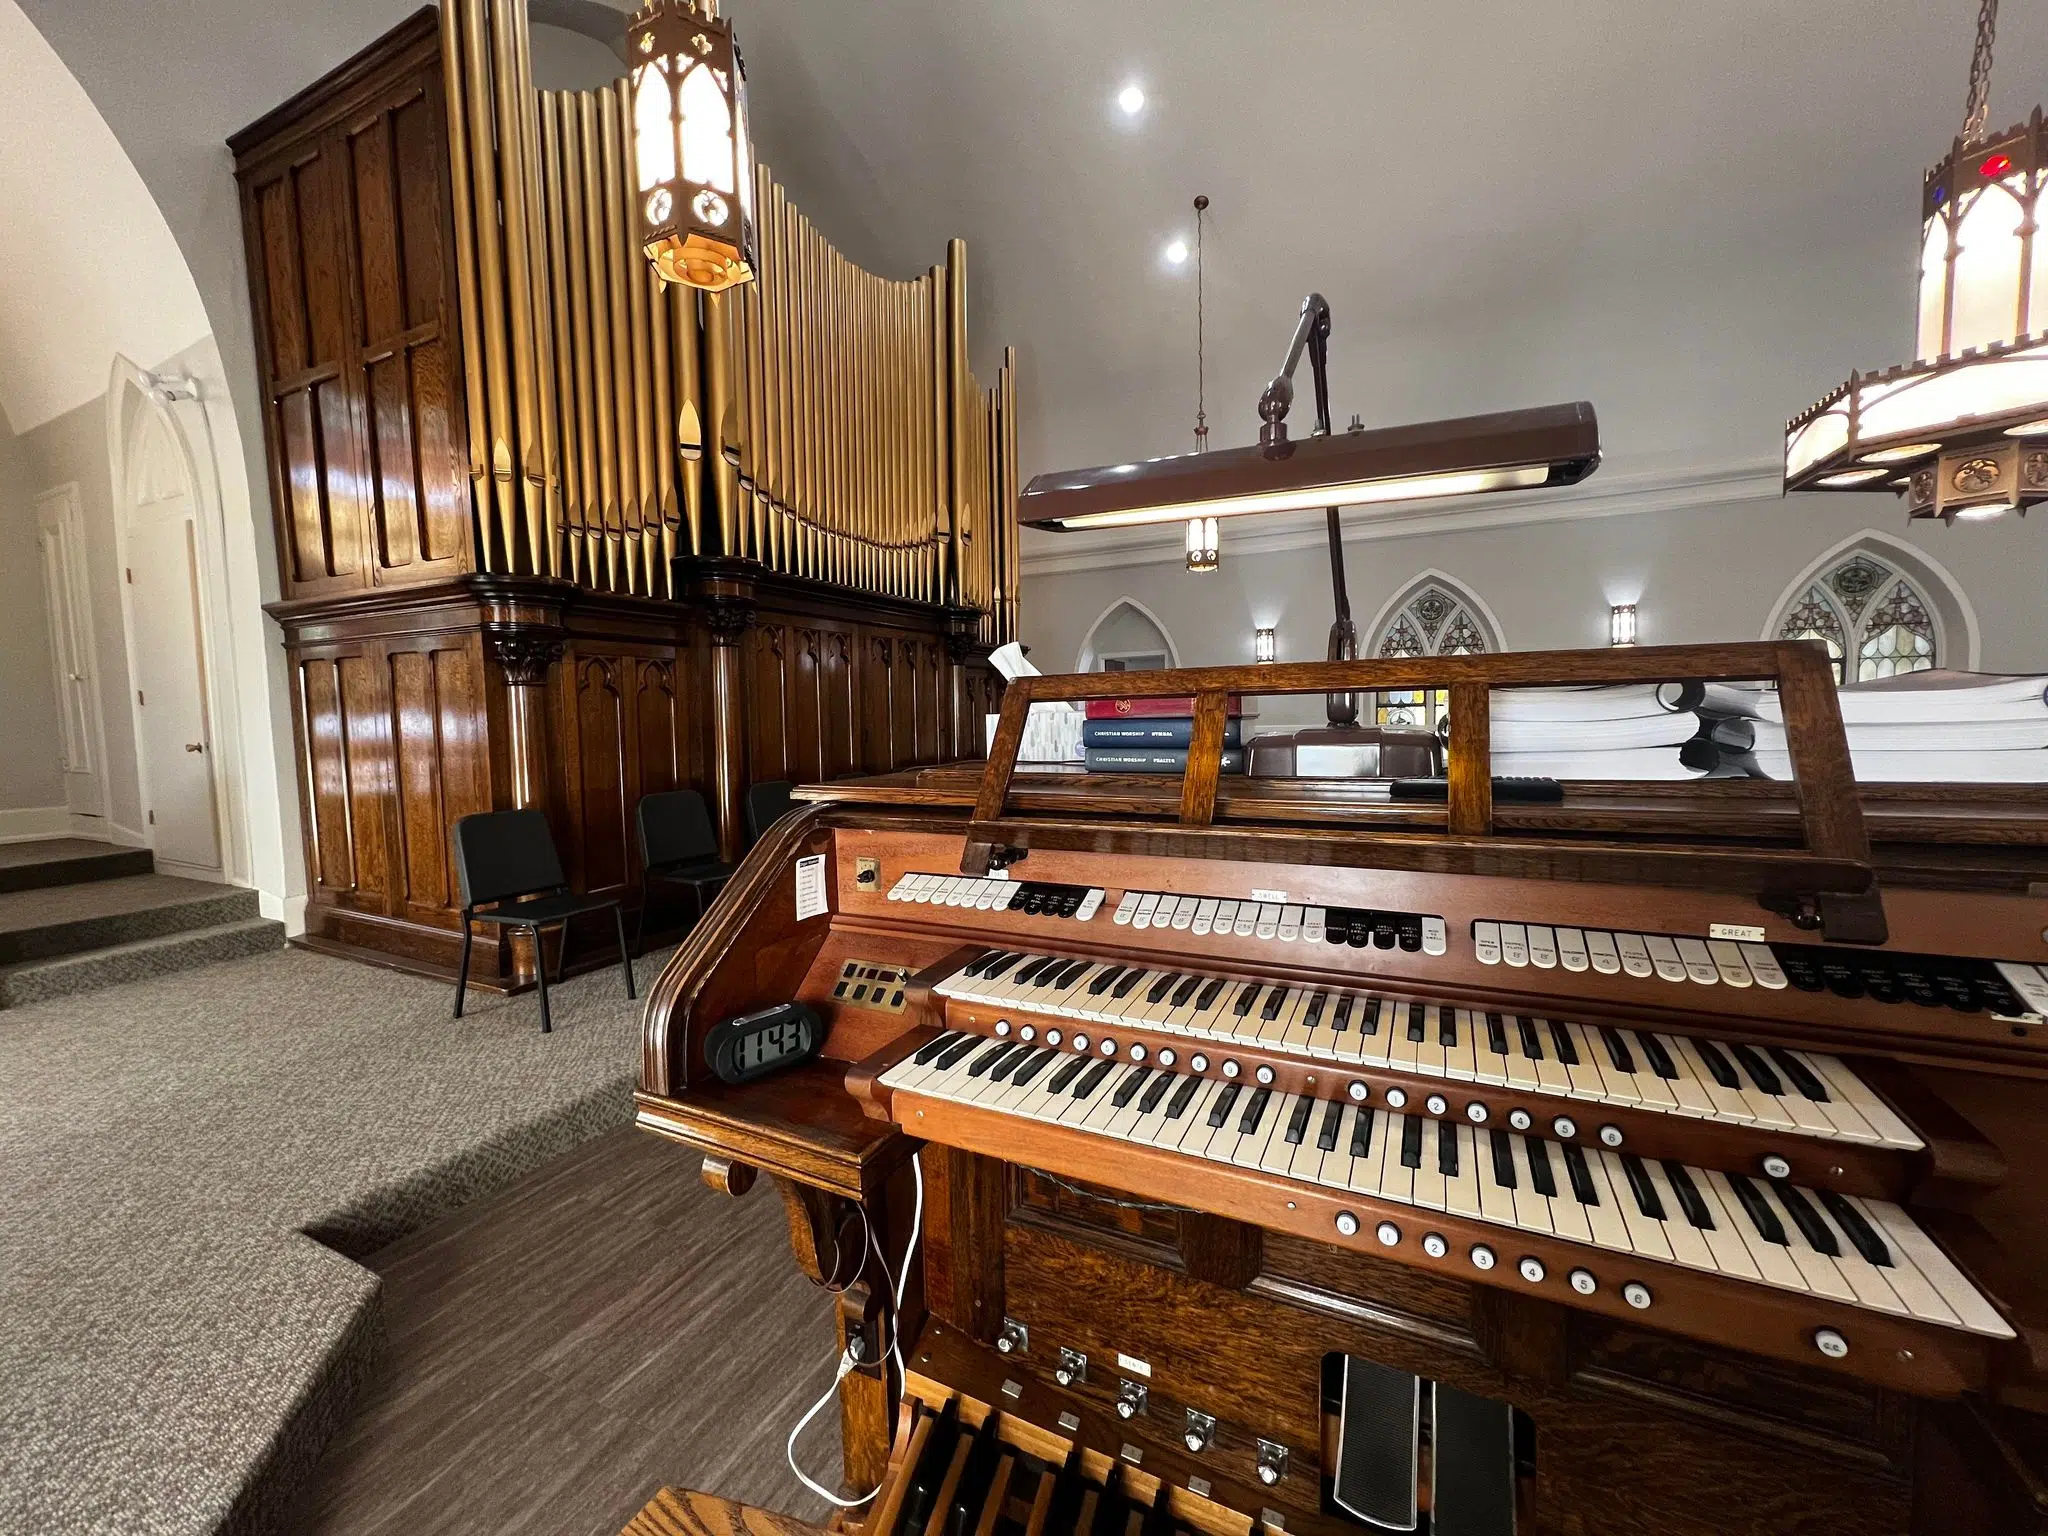 Local Church Embarks On Pipe Organ Refurbishment Project